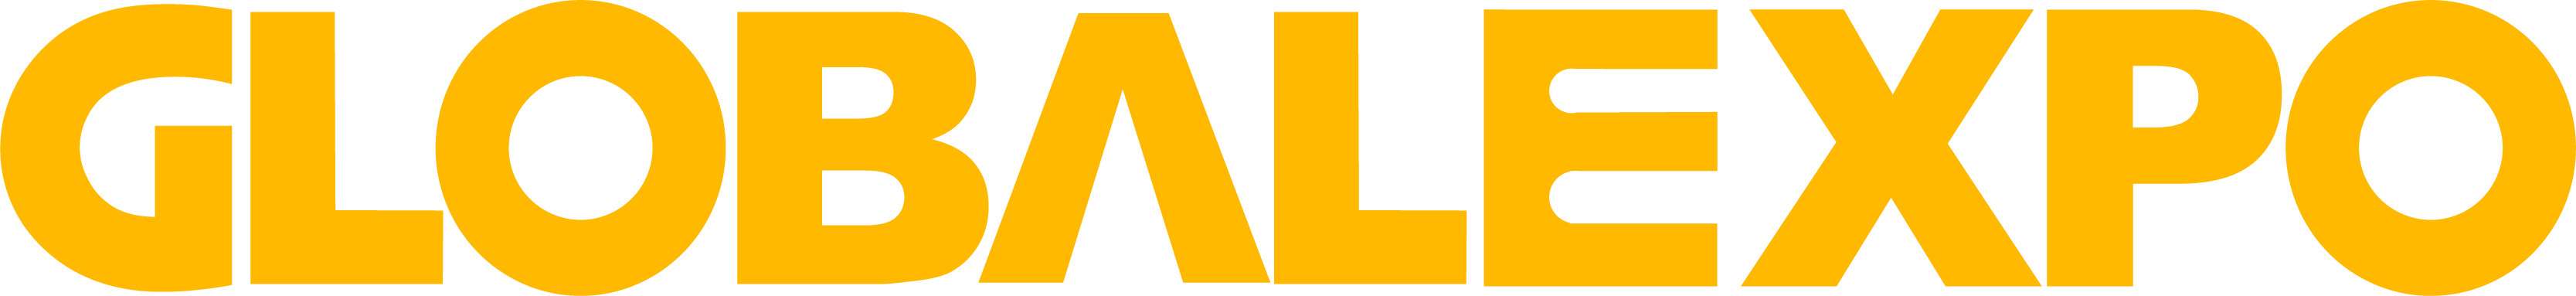 Logo globalexpo.jpg